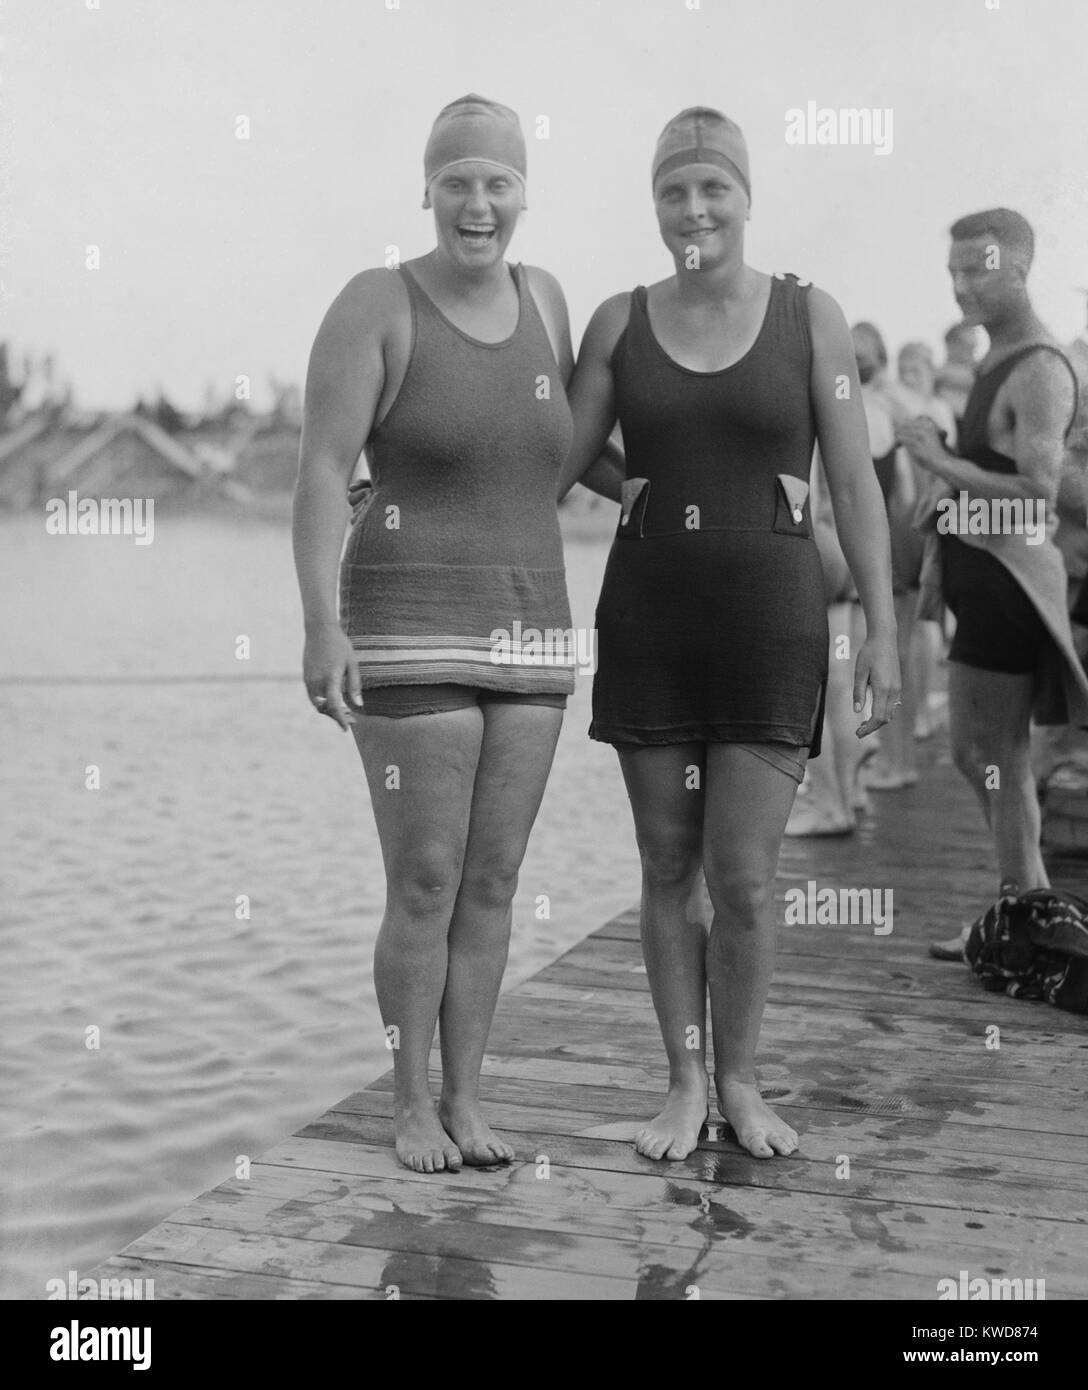 1920 Olympic nuotatori Charlotte Boyle e Ethelda Bleibtrey. Bleibtrey ha vinto tre medaglie d'oro gli eventi Freestyle presso i giochi di Anversa nel 1920. Boyle nuotato nelle donne a 100 metri di freestyle. (BSLOC 2015 17 136) Foto Stock